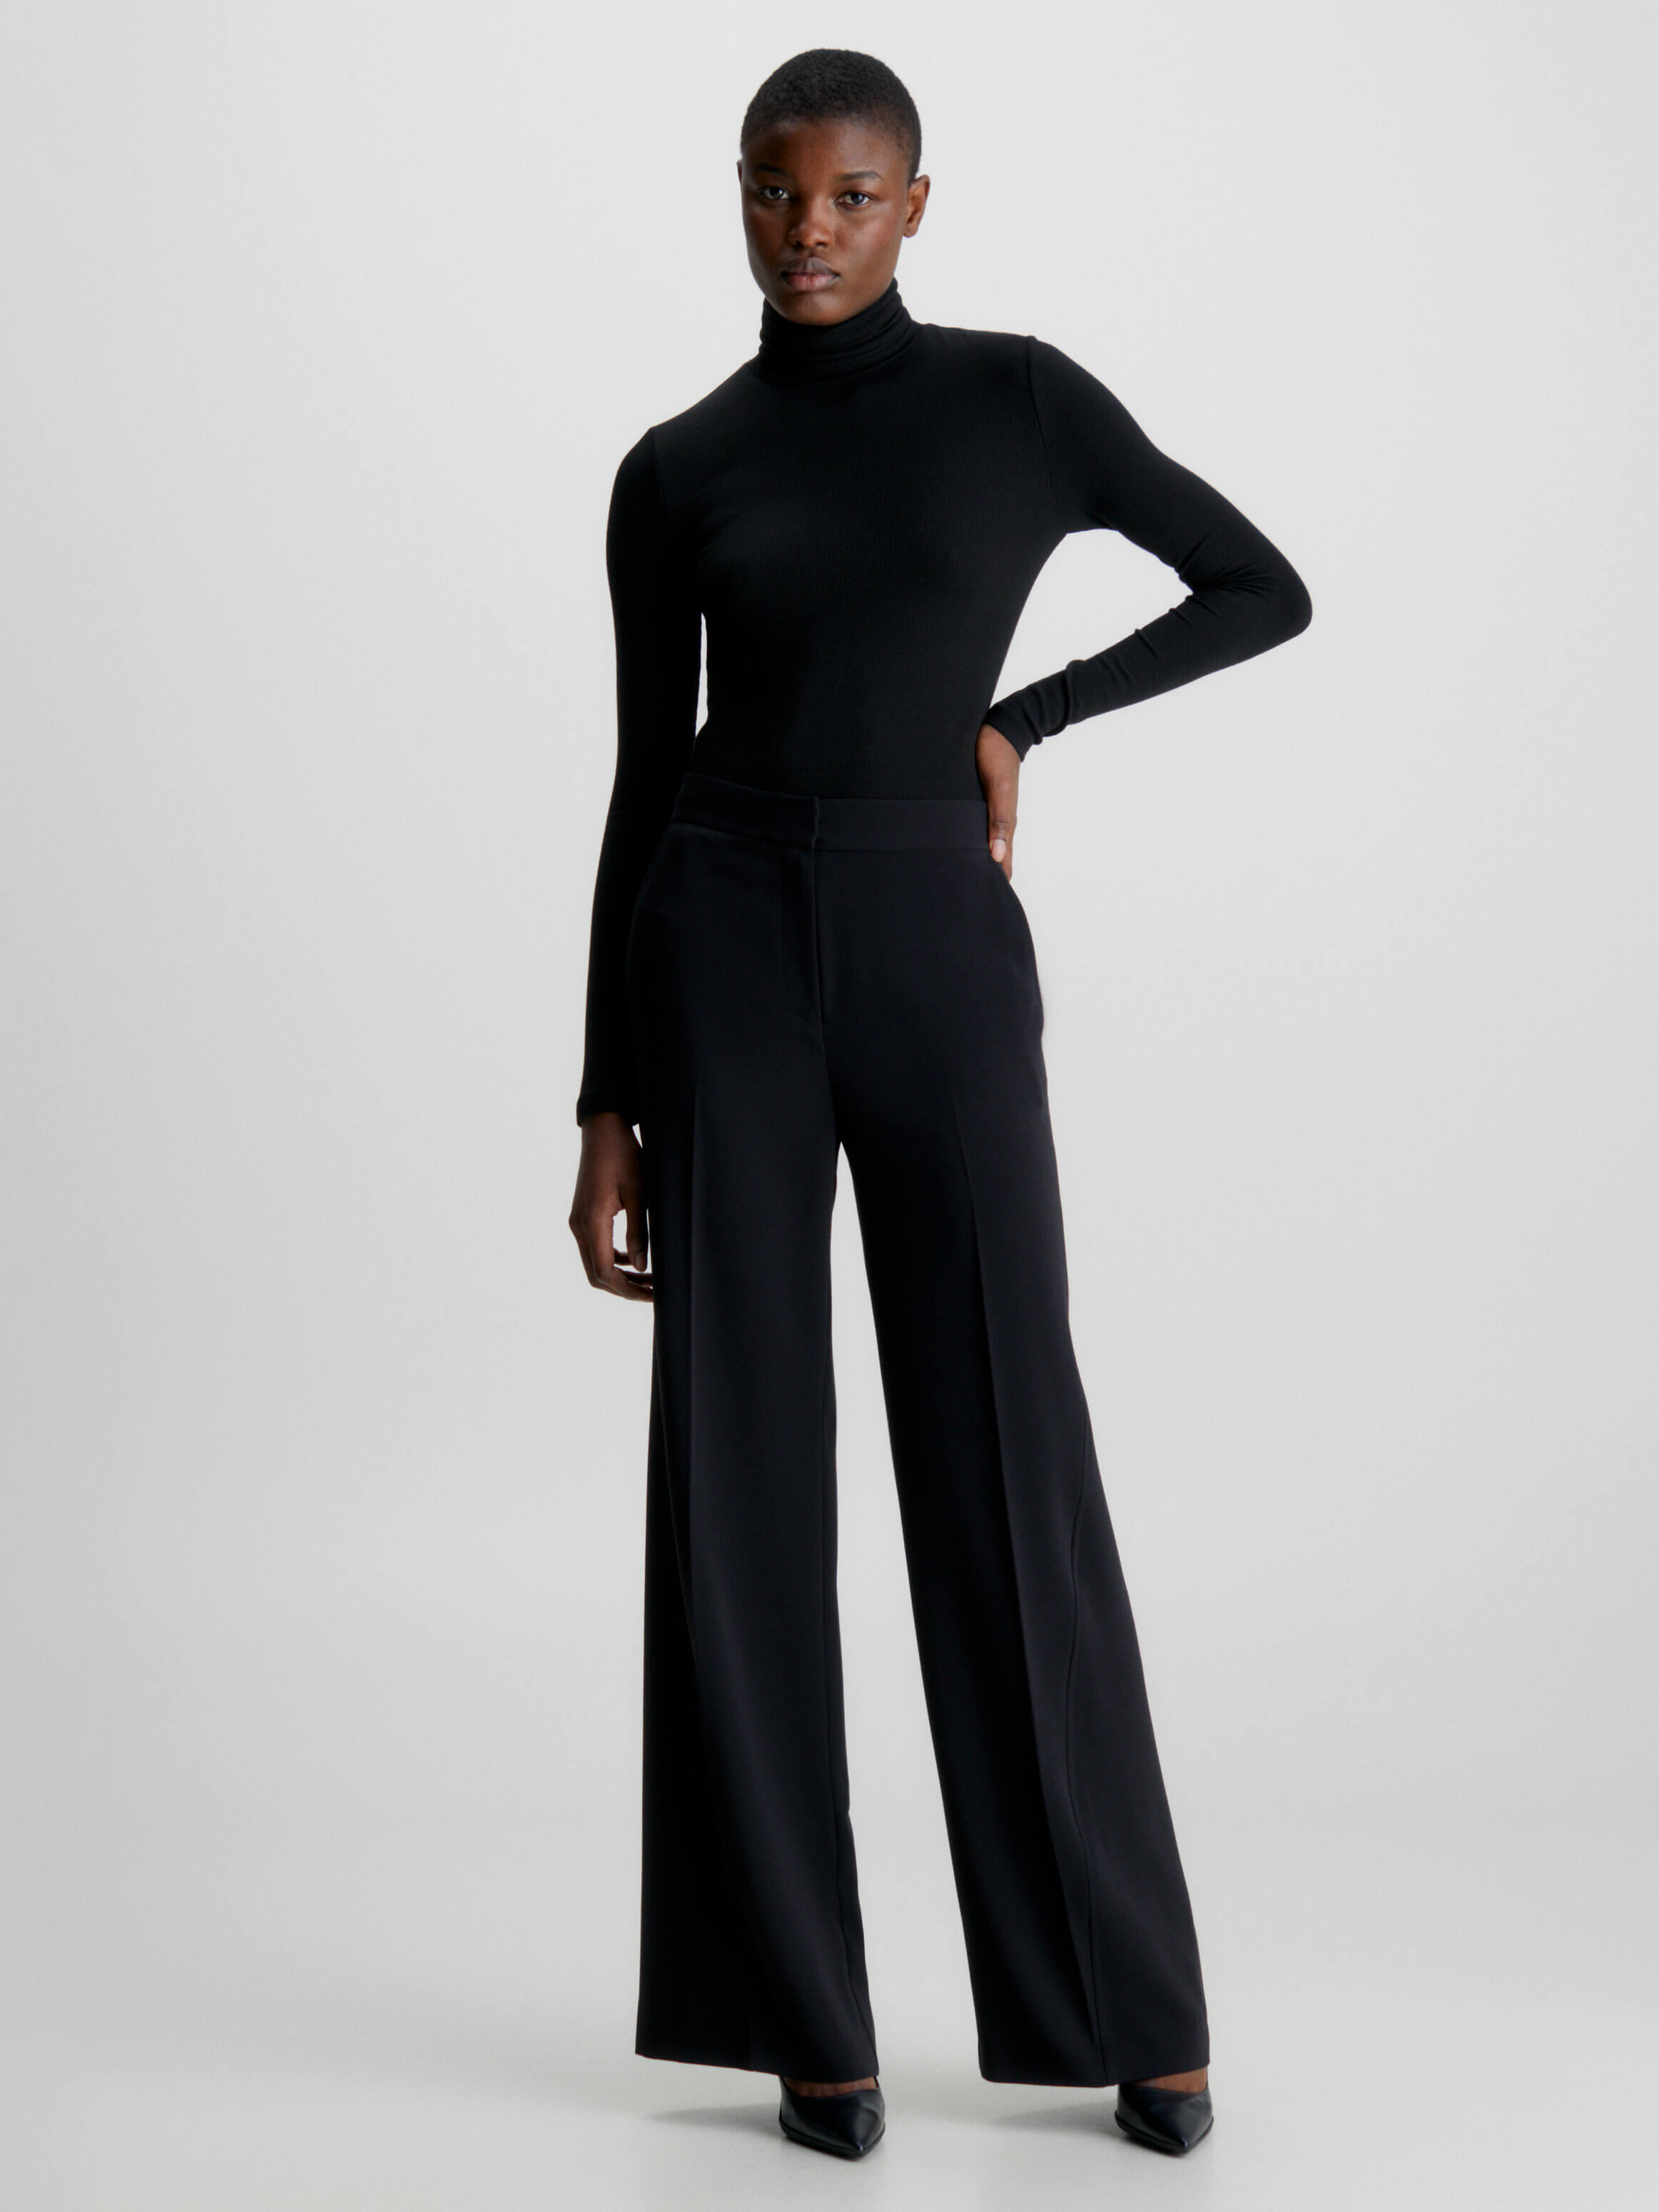 Suéter Calvin Klein Acanalado Mujer Negro